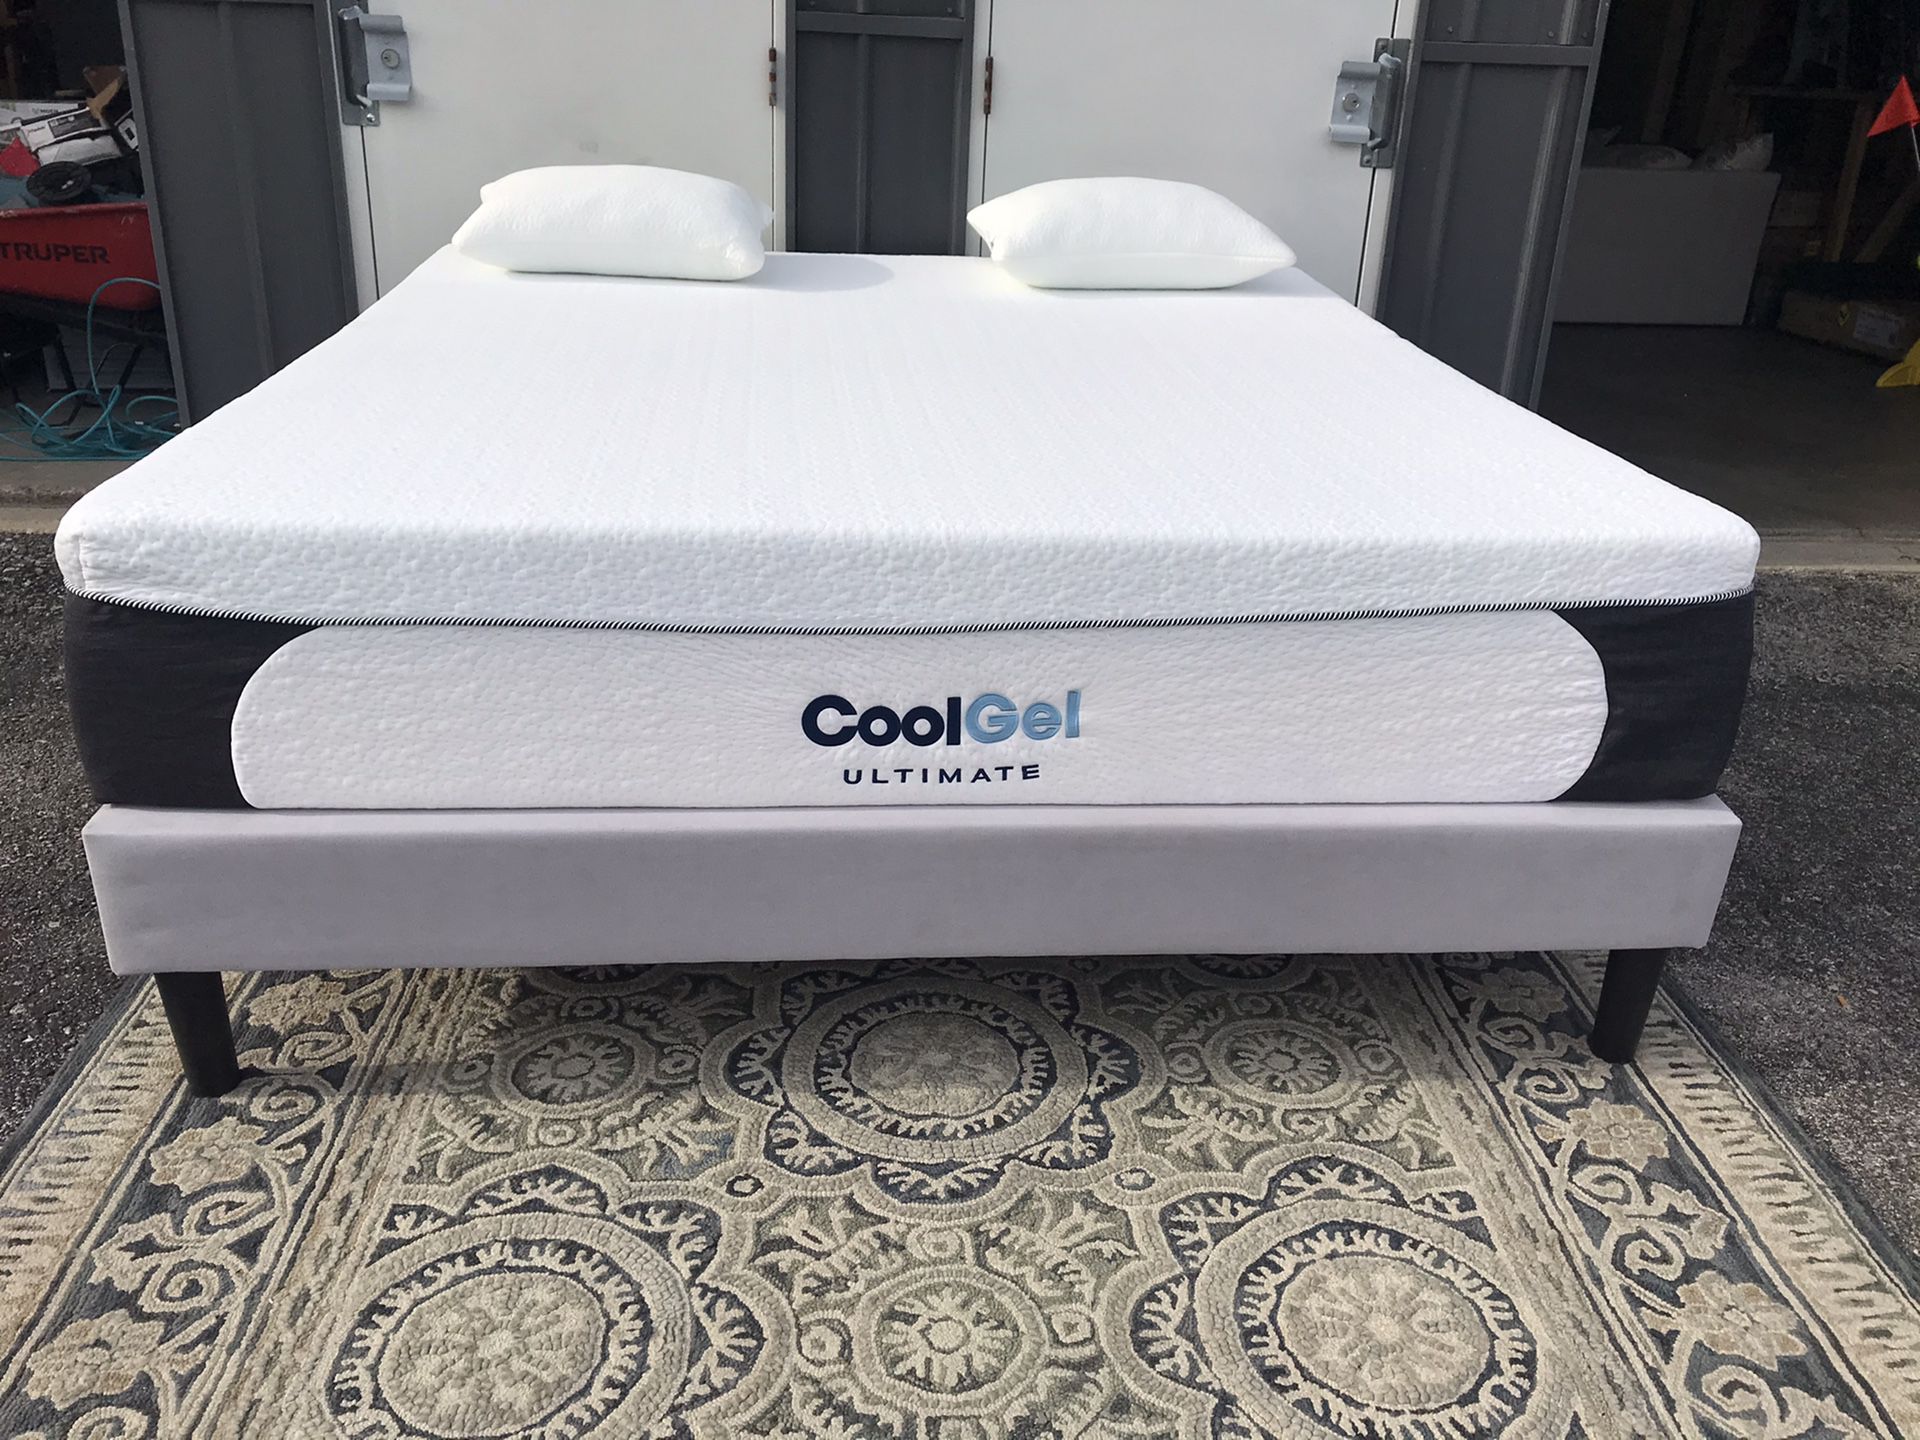 New King size 14” cool gel memory foam mattress and platform bed frame